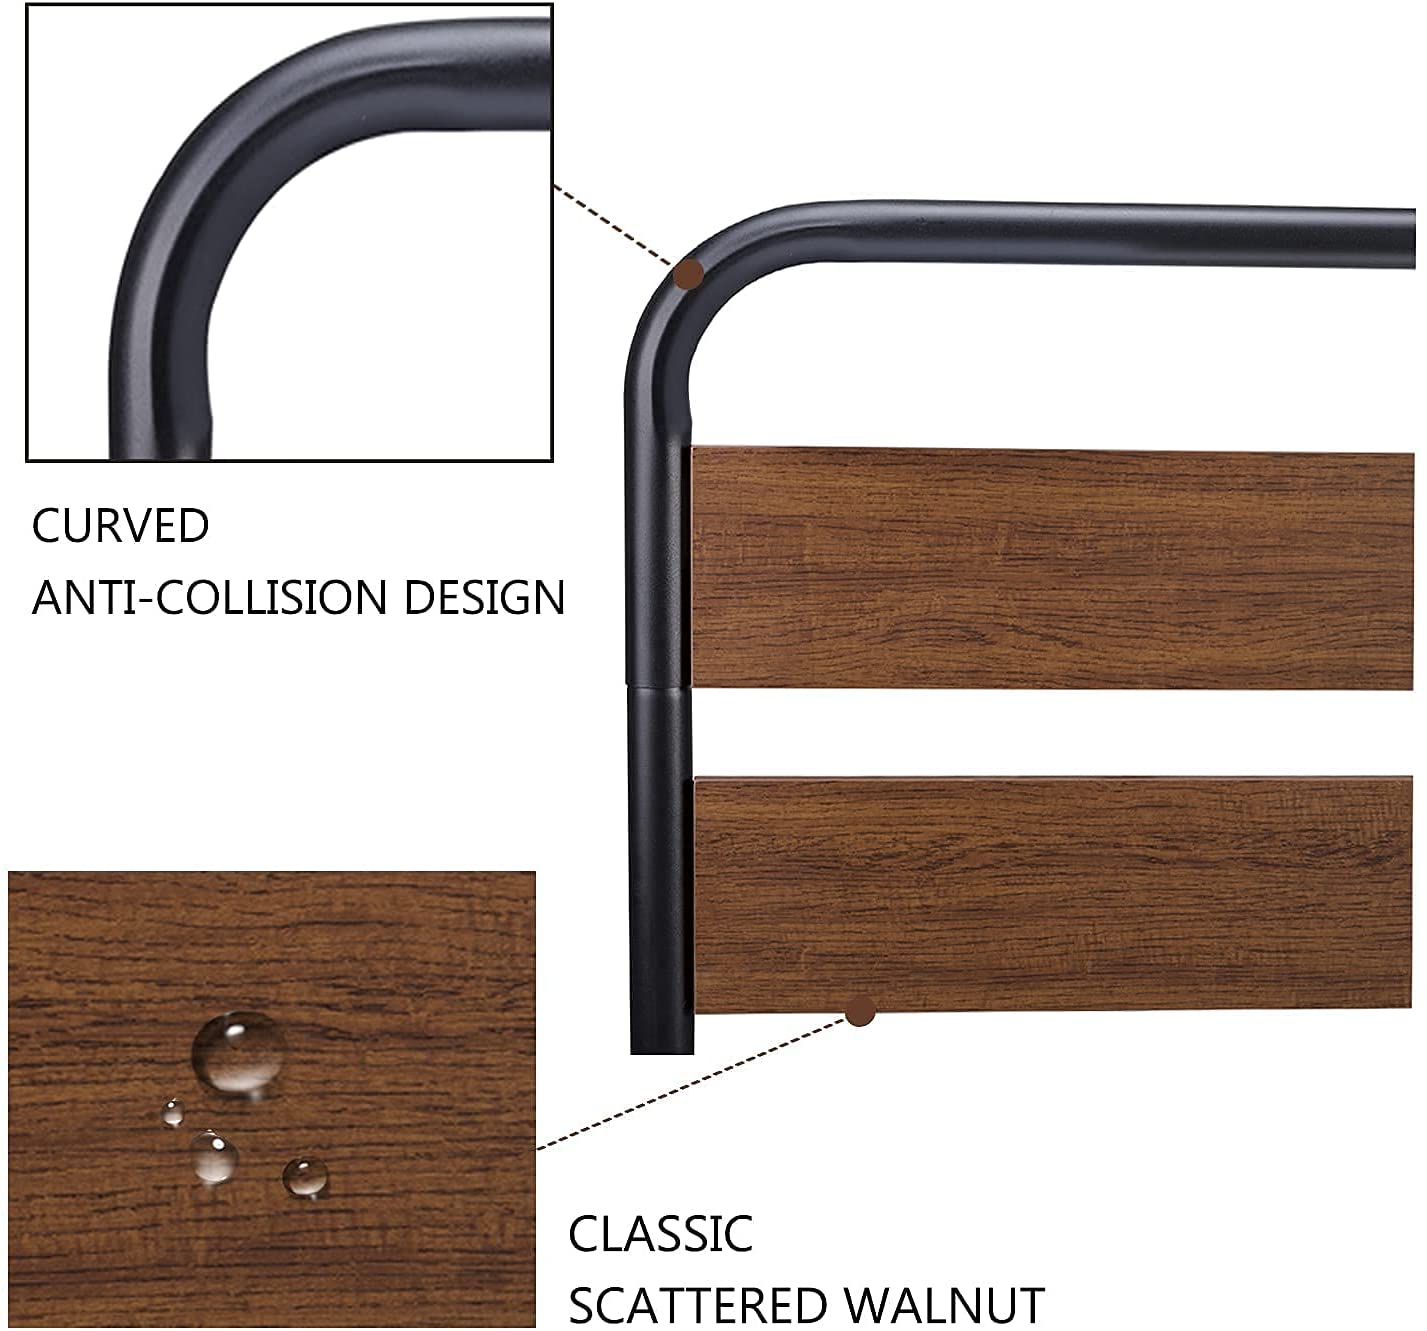 Allewie Metal Bed Frame with Wooden Headboard & Footboard, Heavy Duty Platform Frame with Under-Bed Storage